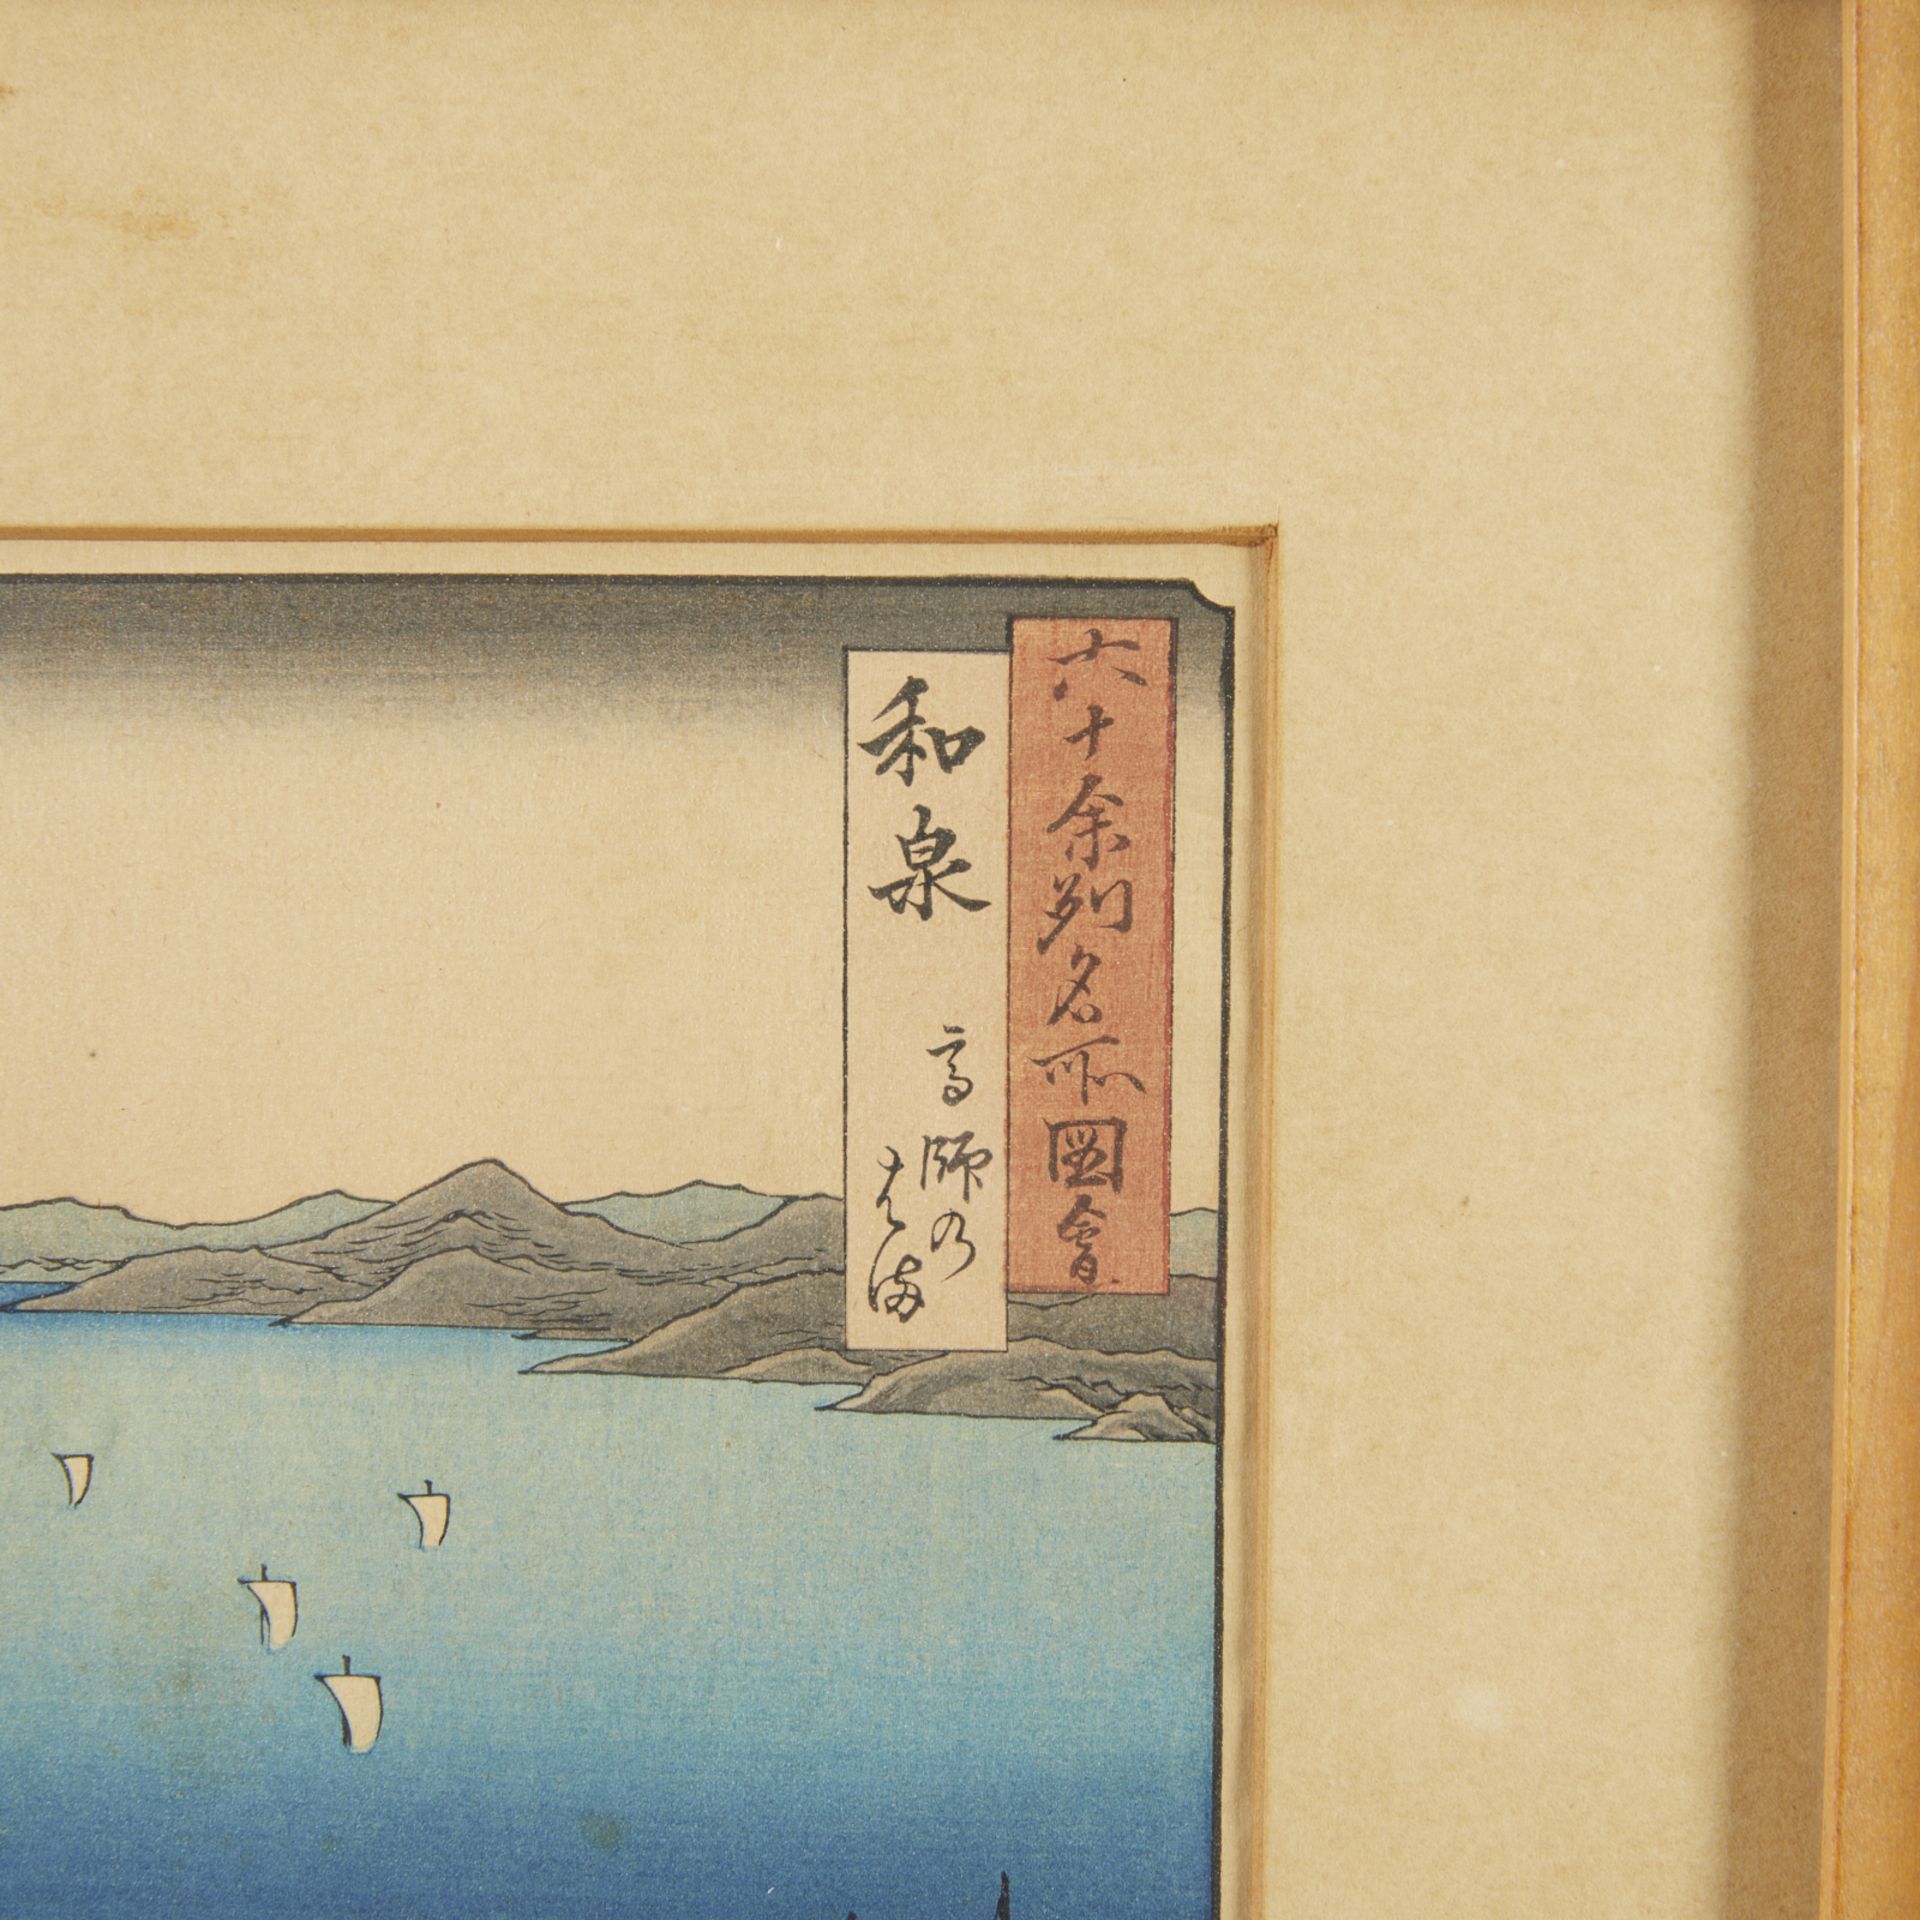 Utagawa Hiroshige "Izumi Beach" Woodblock Print - Image 2 of 7